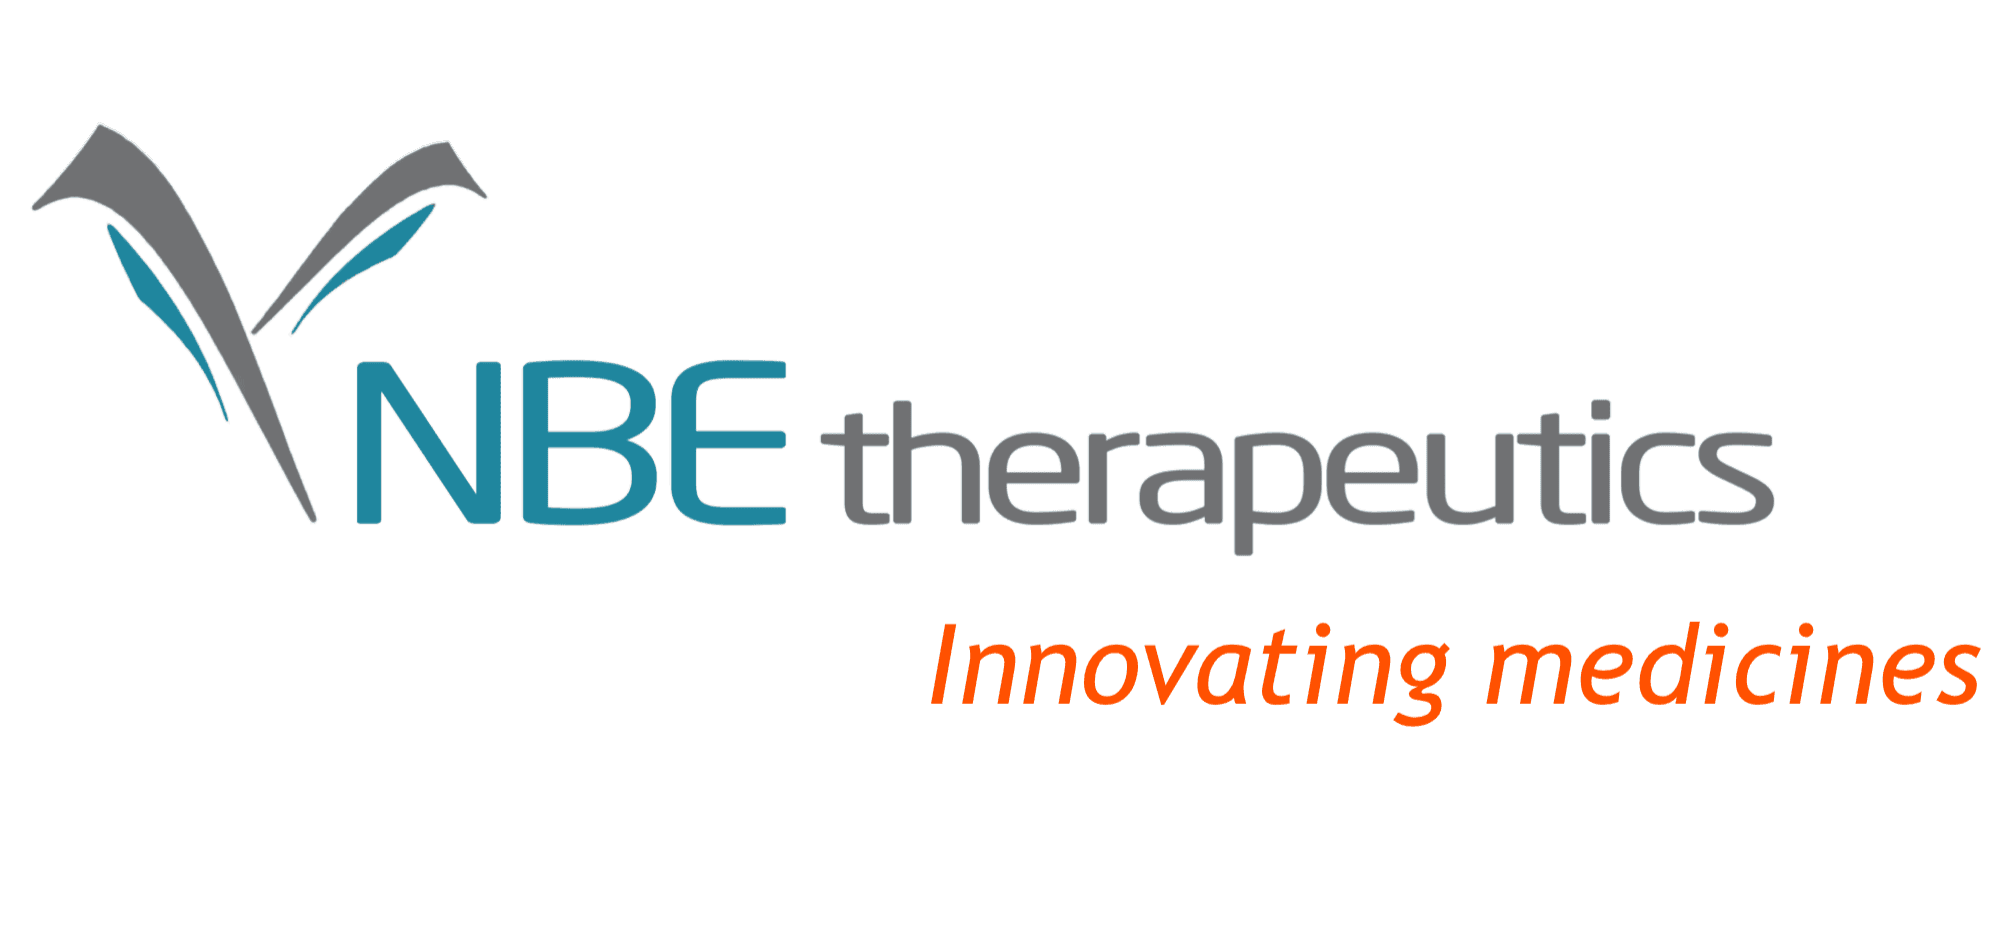 NBE-Therapeutics AG